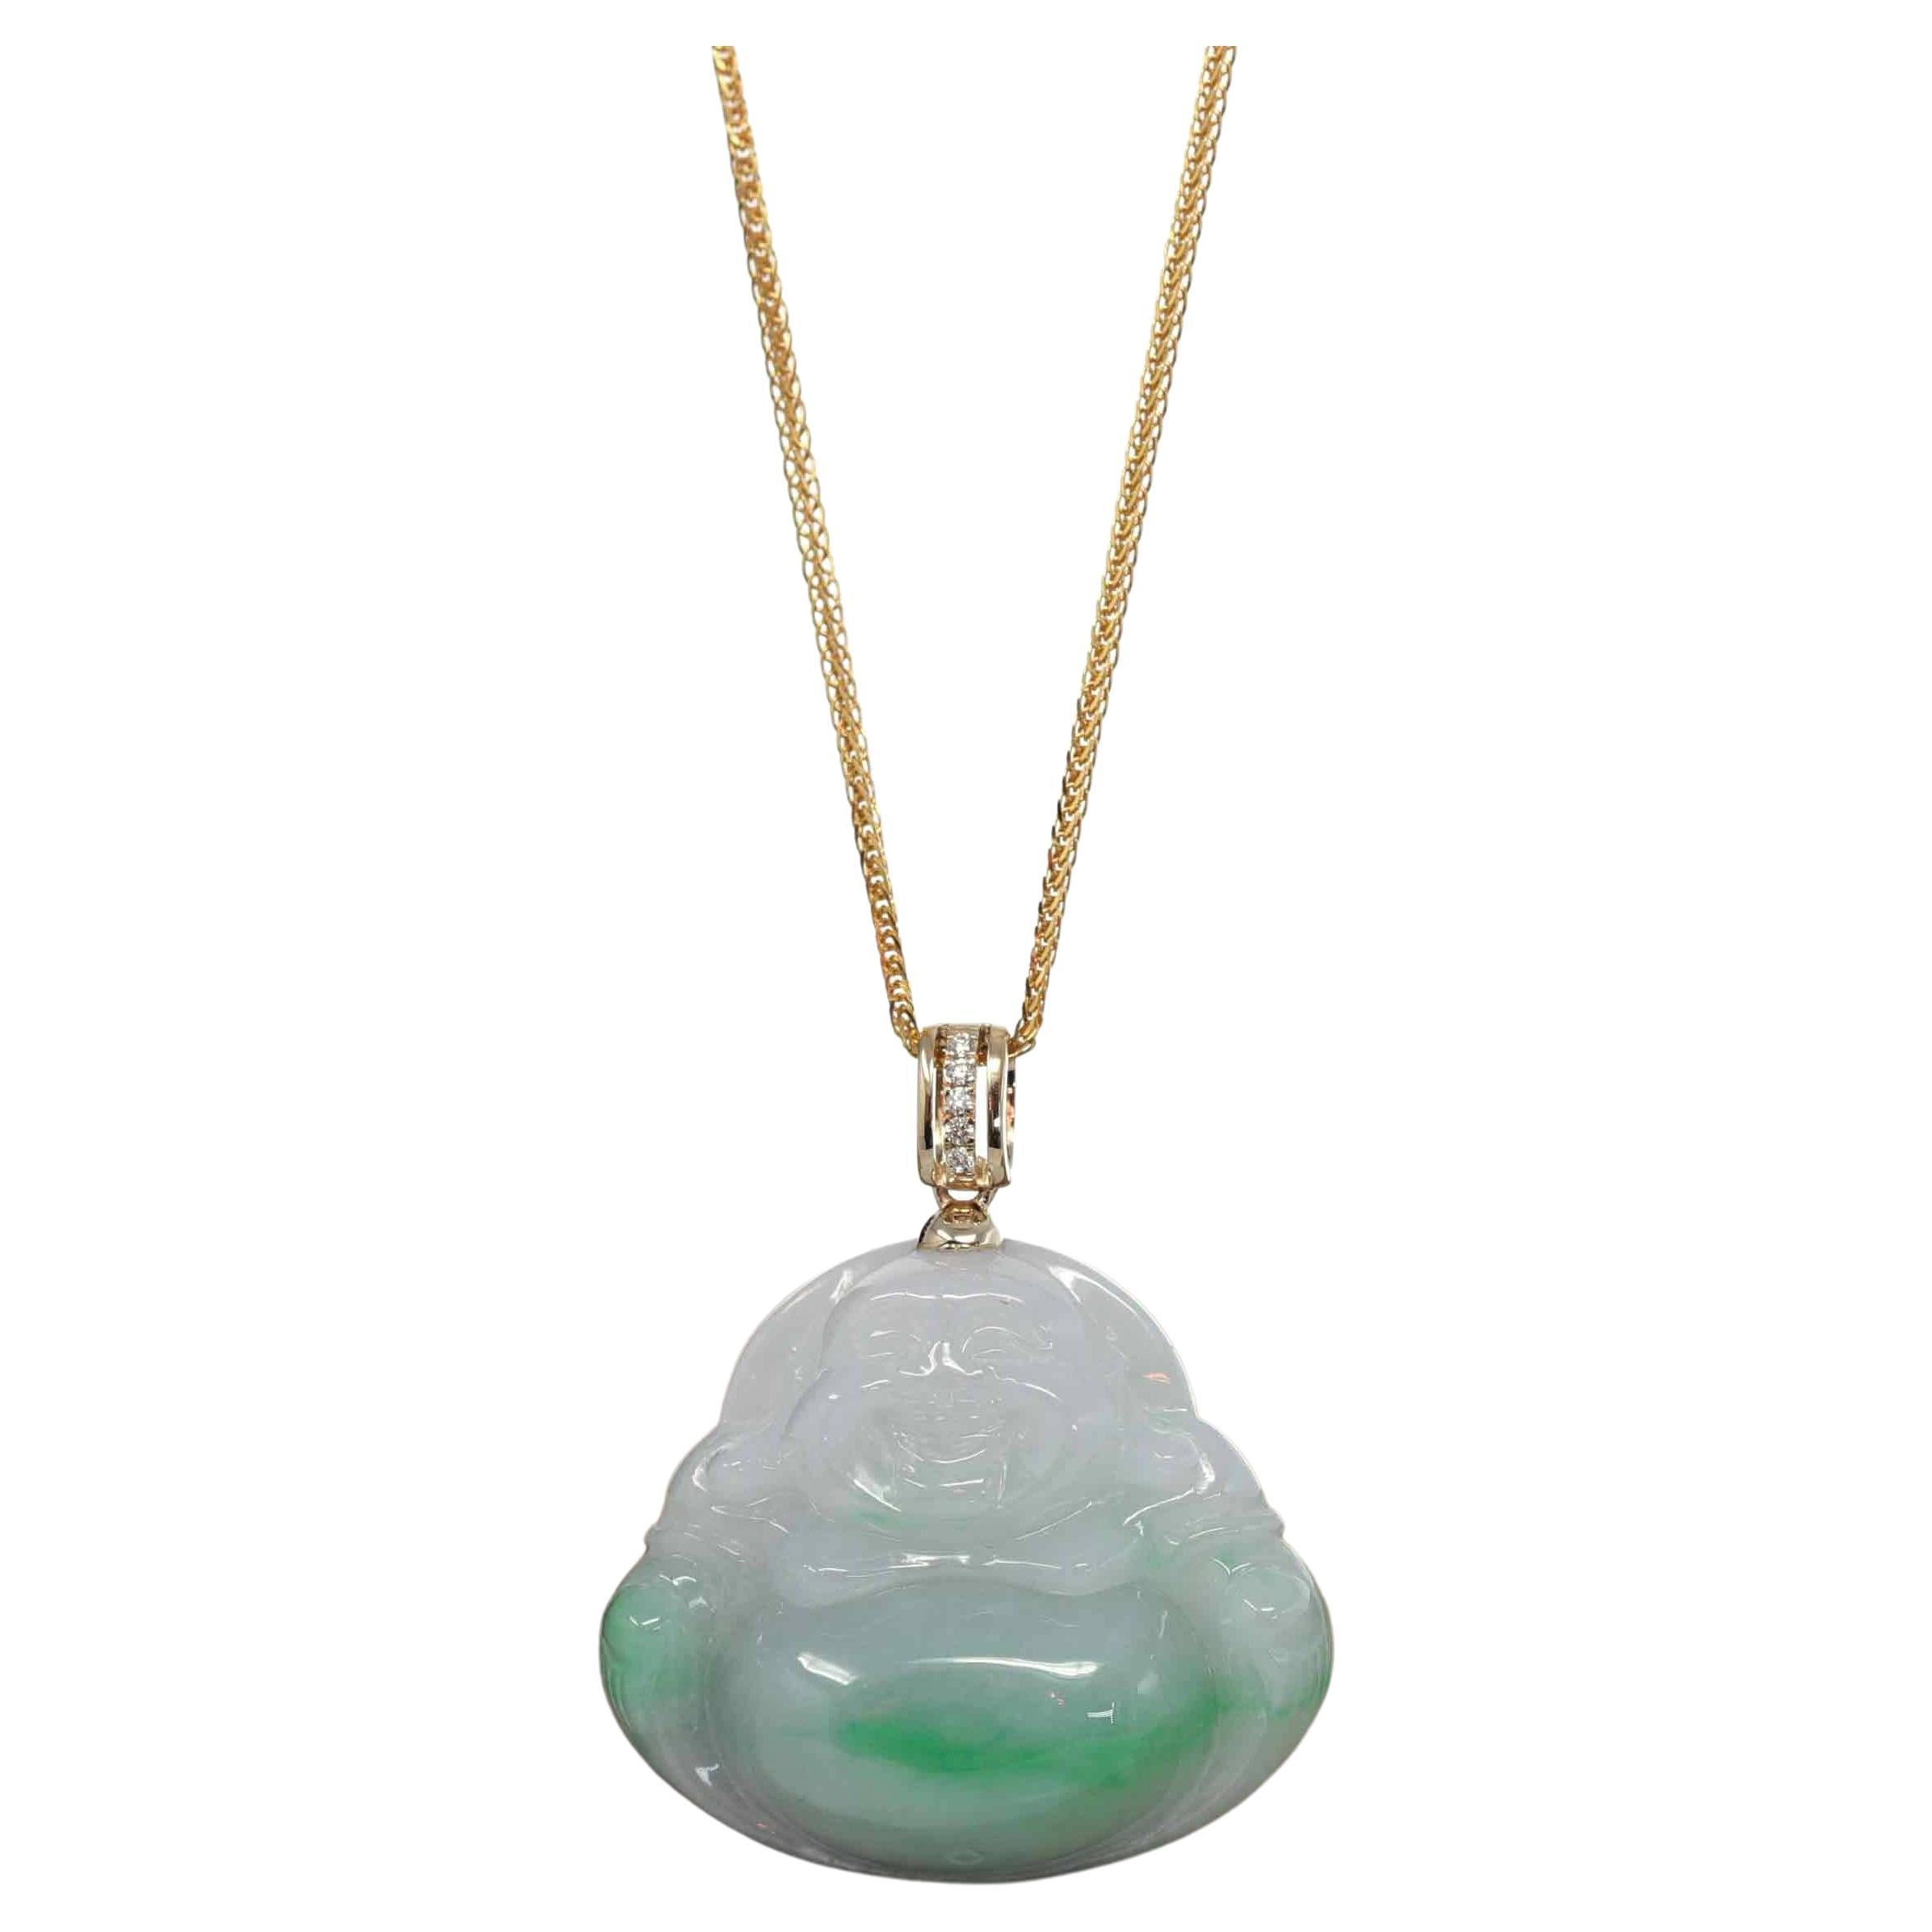 "Laughing Buddha" Green Jadeite Jade Necklace with 14k Yellow Gold Diamond Bail